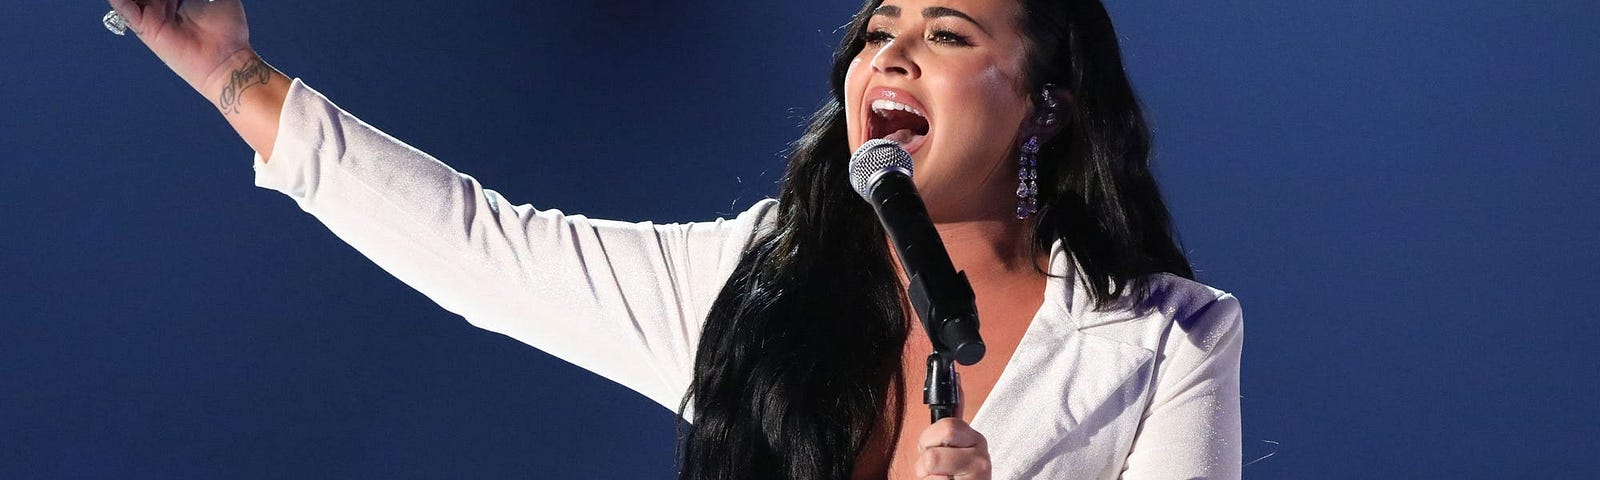 Photo of Demi Lovato singing